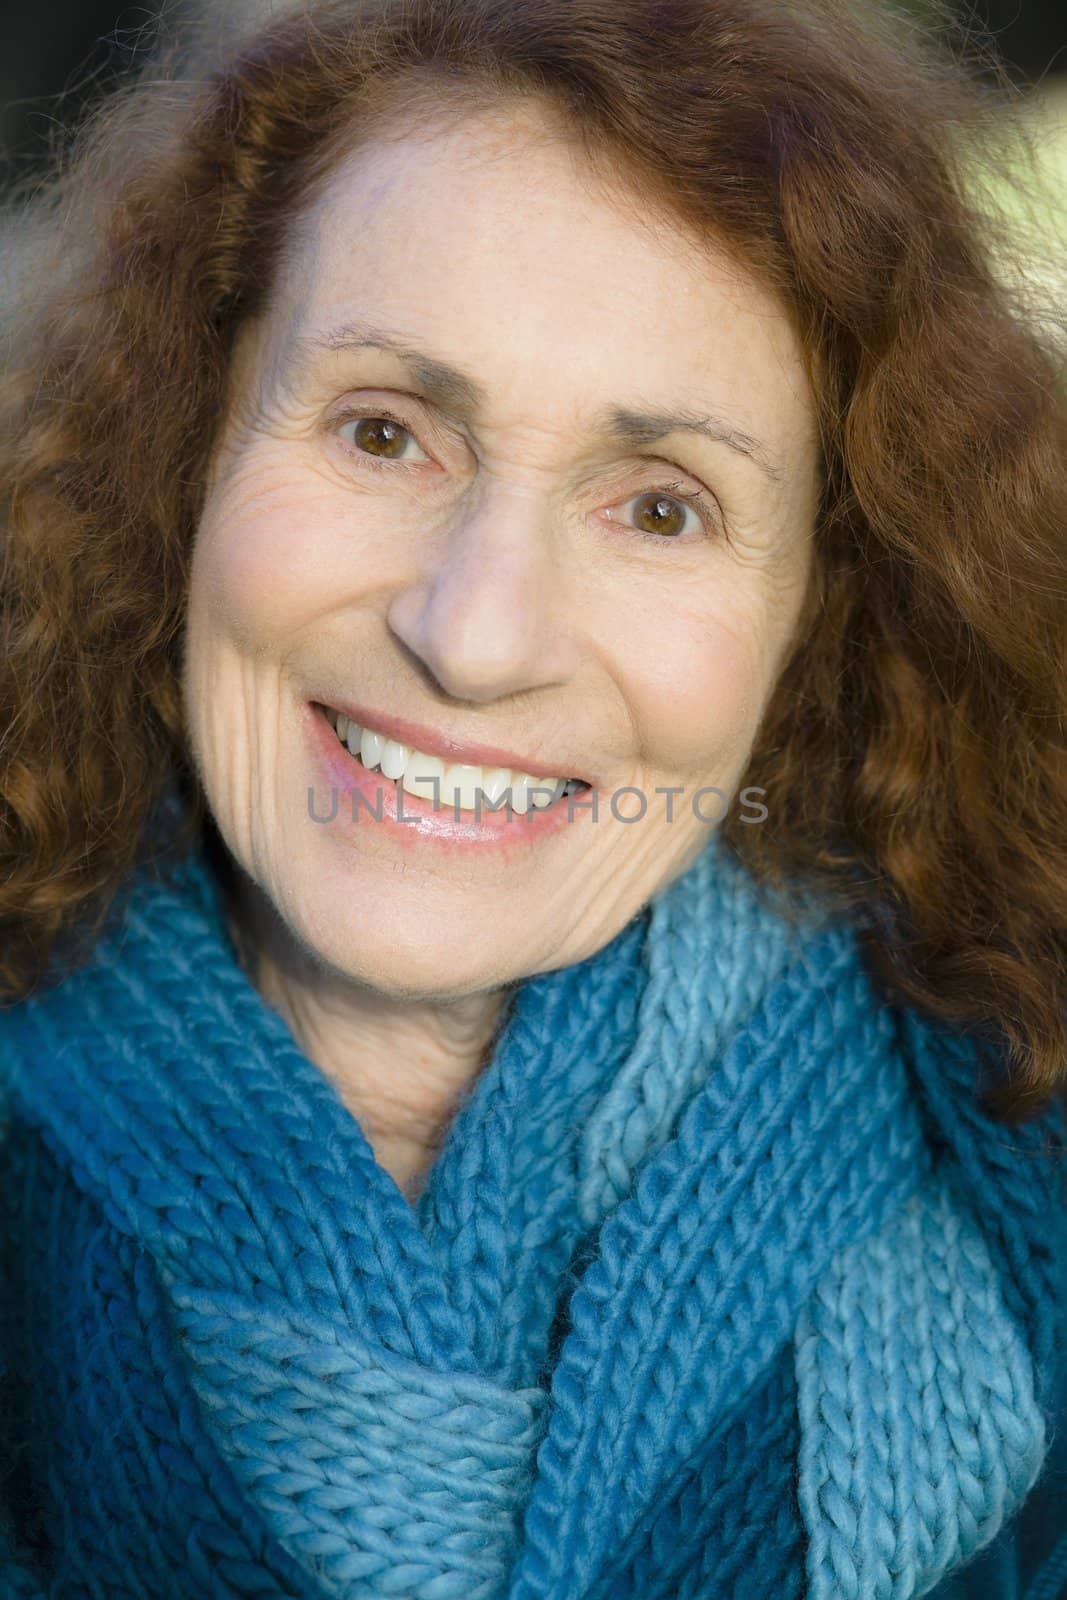 Portrait of a Pretty Smiling Senior Woman